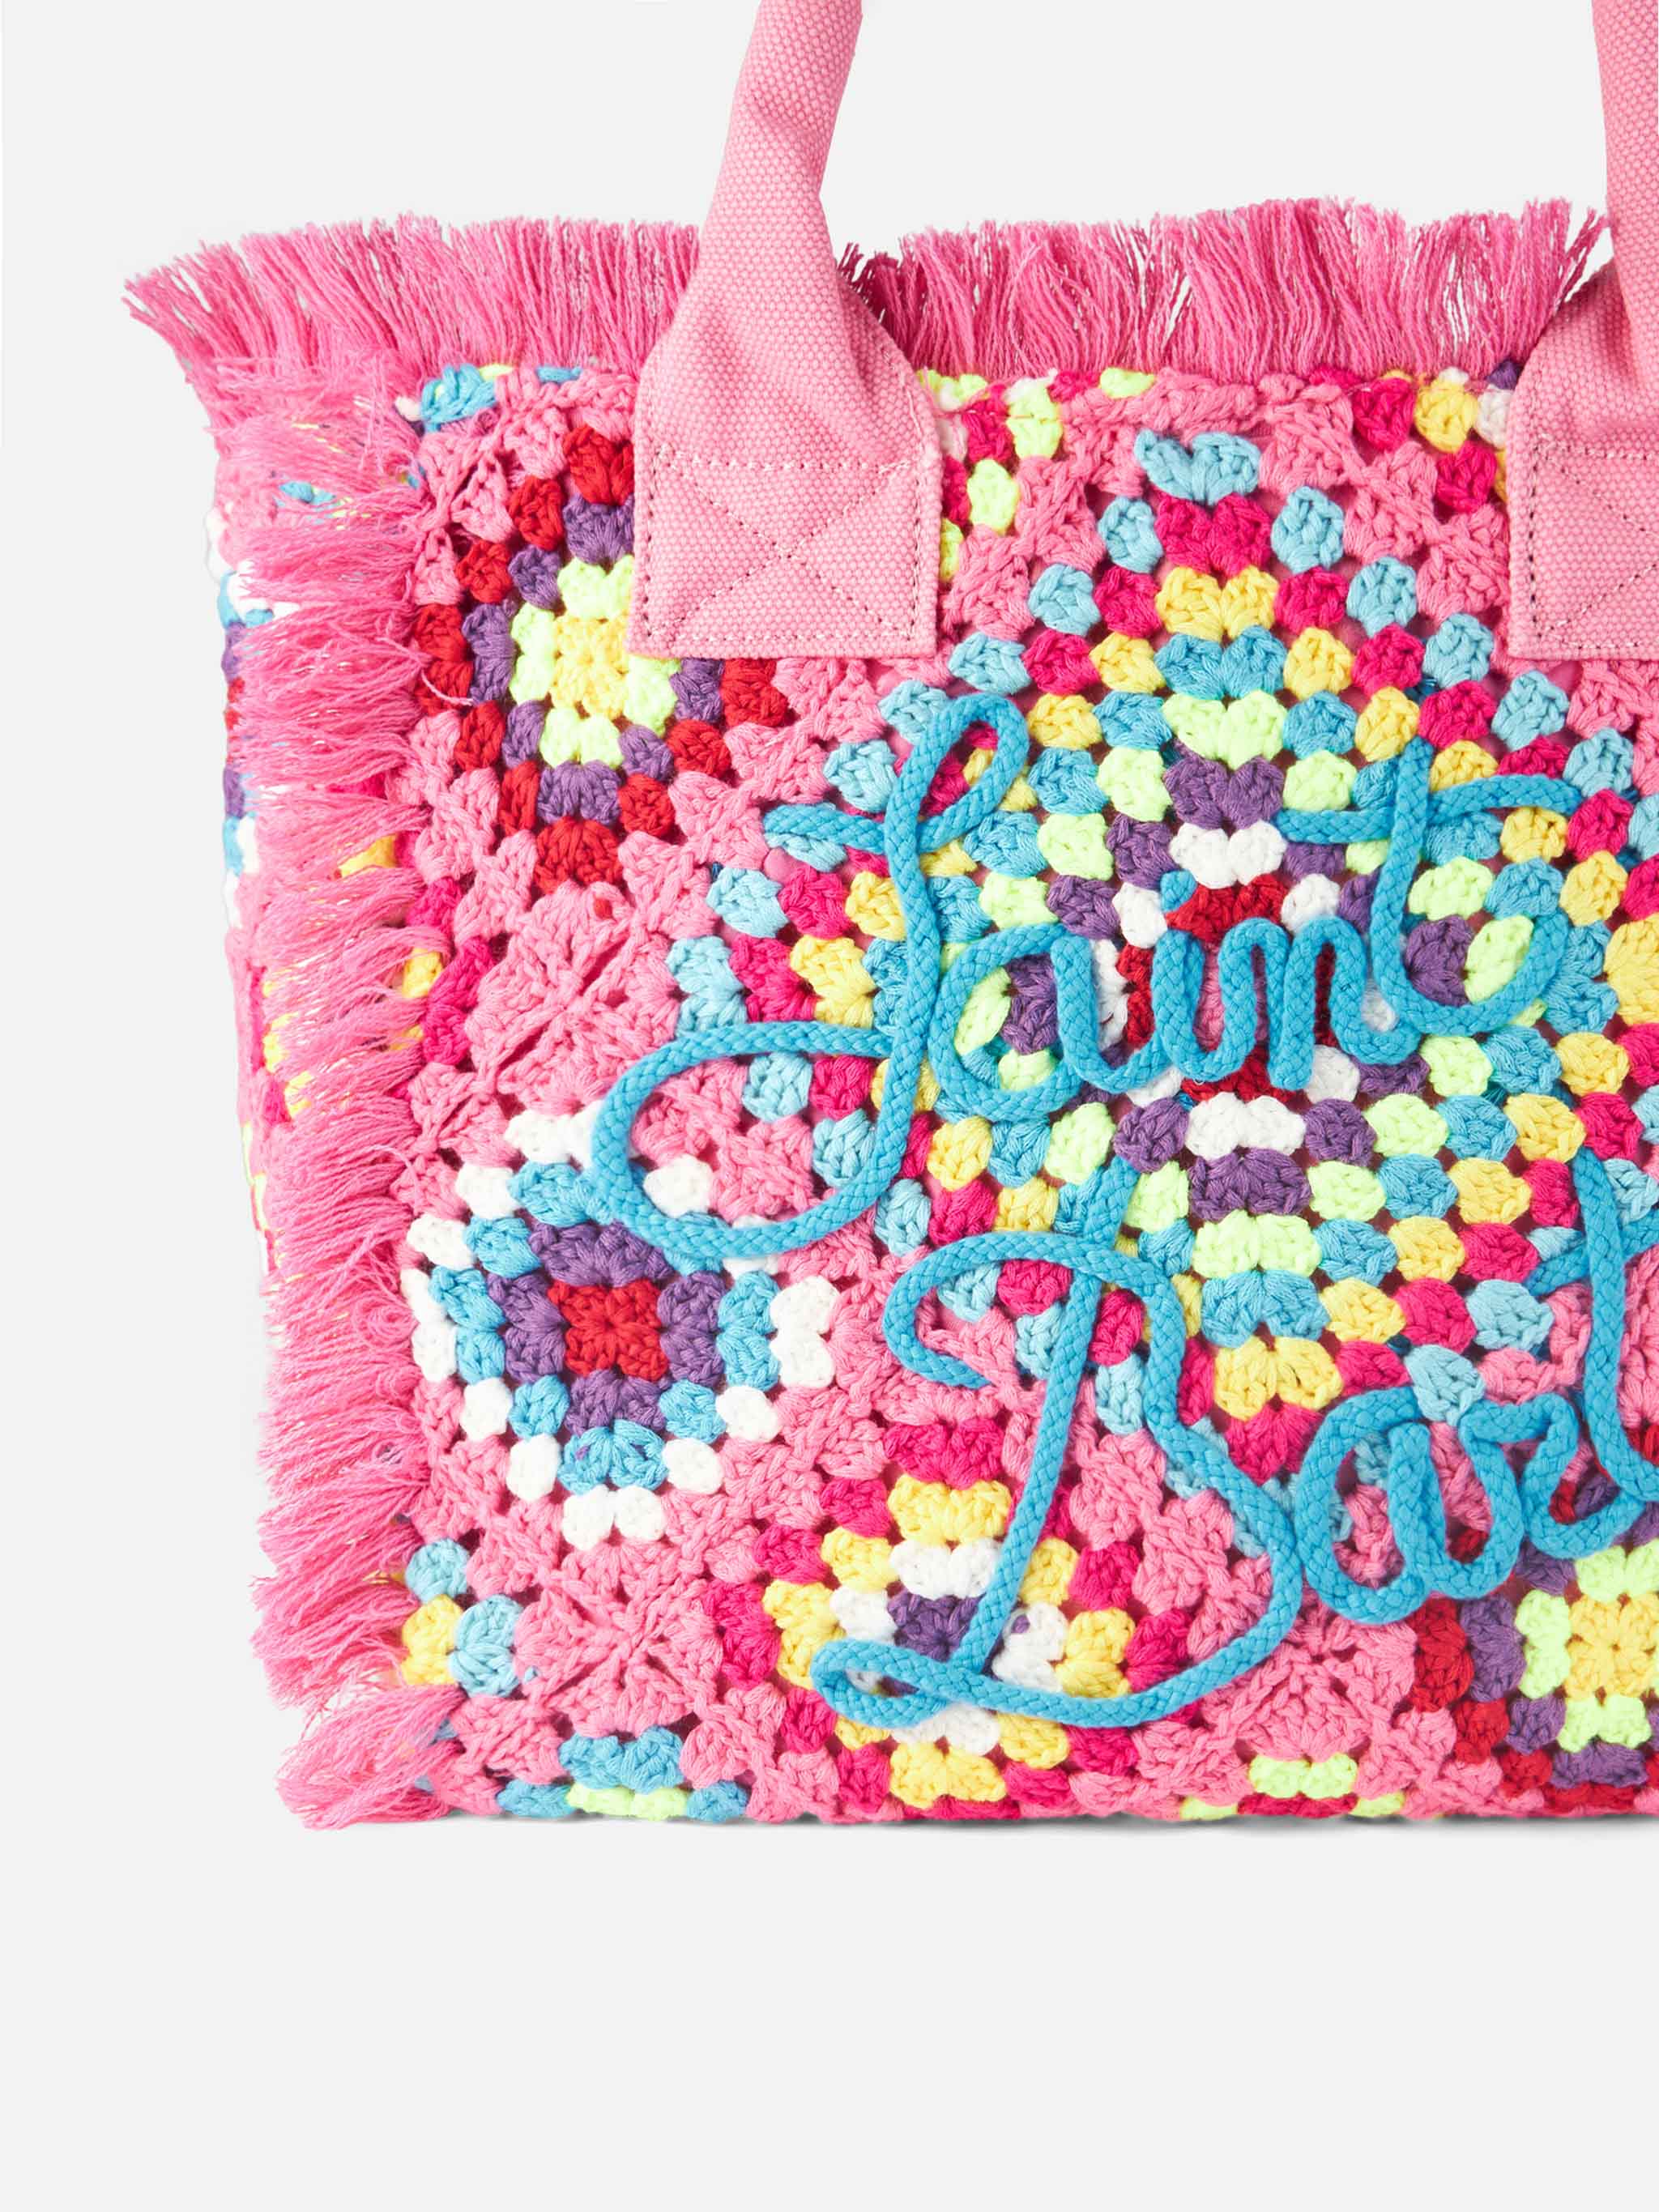 Vanity crochet shoulder bag with pattern – MC2 Saint Barth